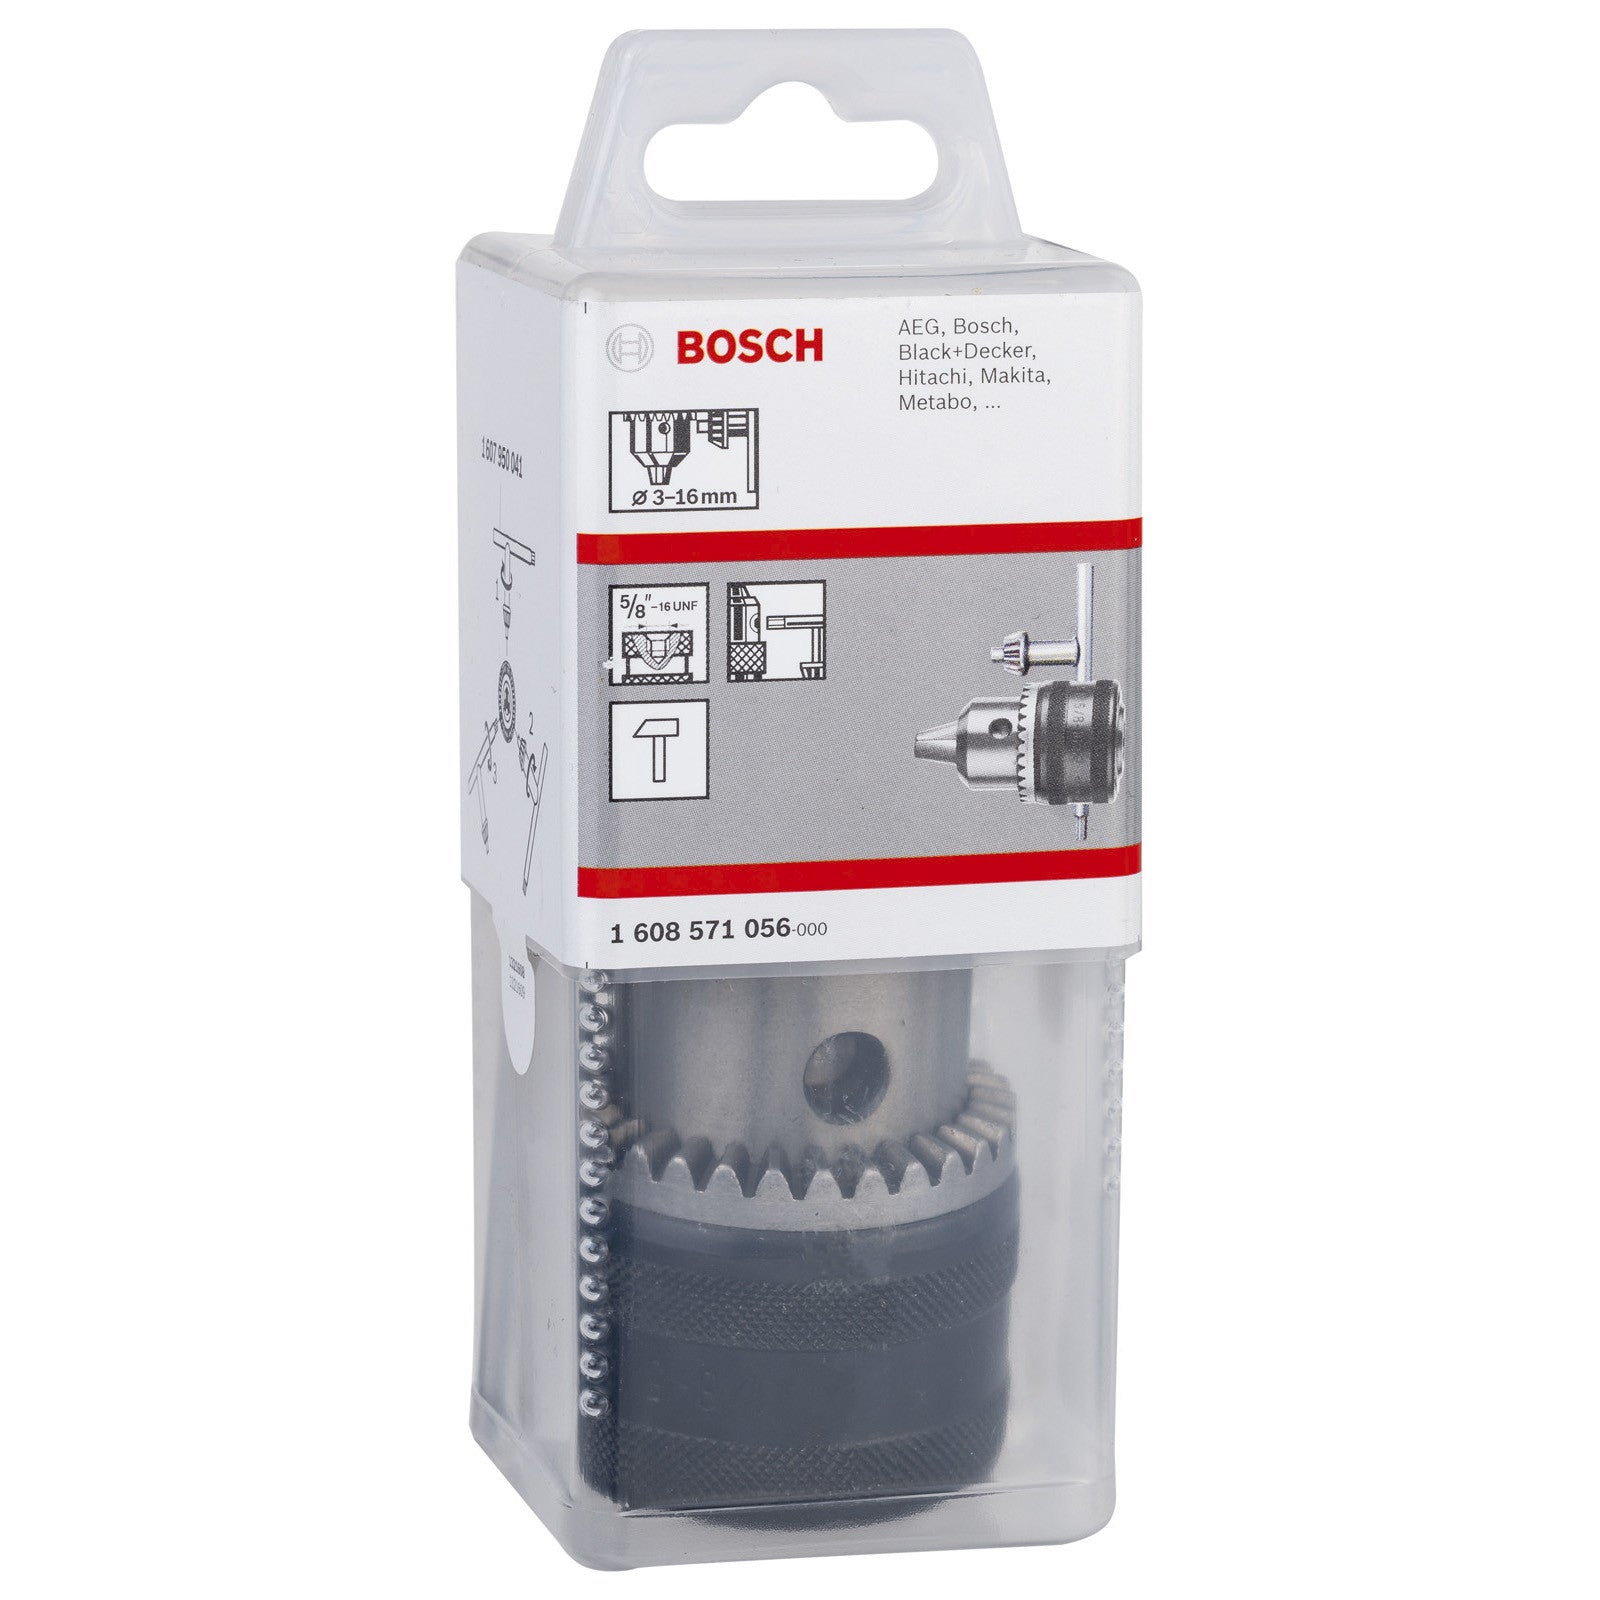 Bosch Keyed chucks up to 16 mm 3 16 mm, 5/8" - 16 1608571056